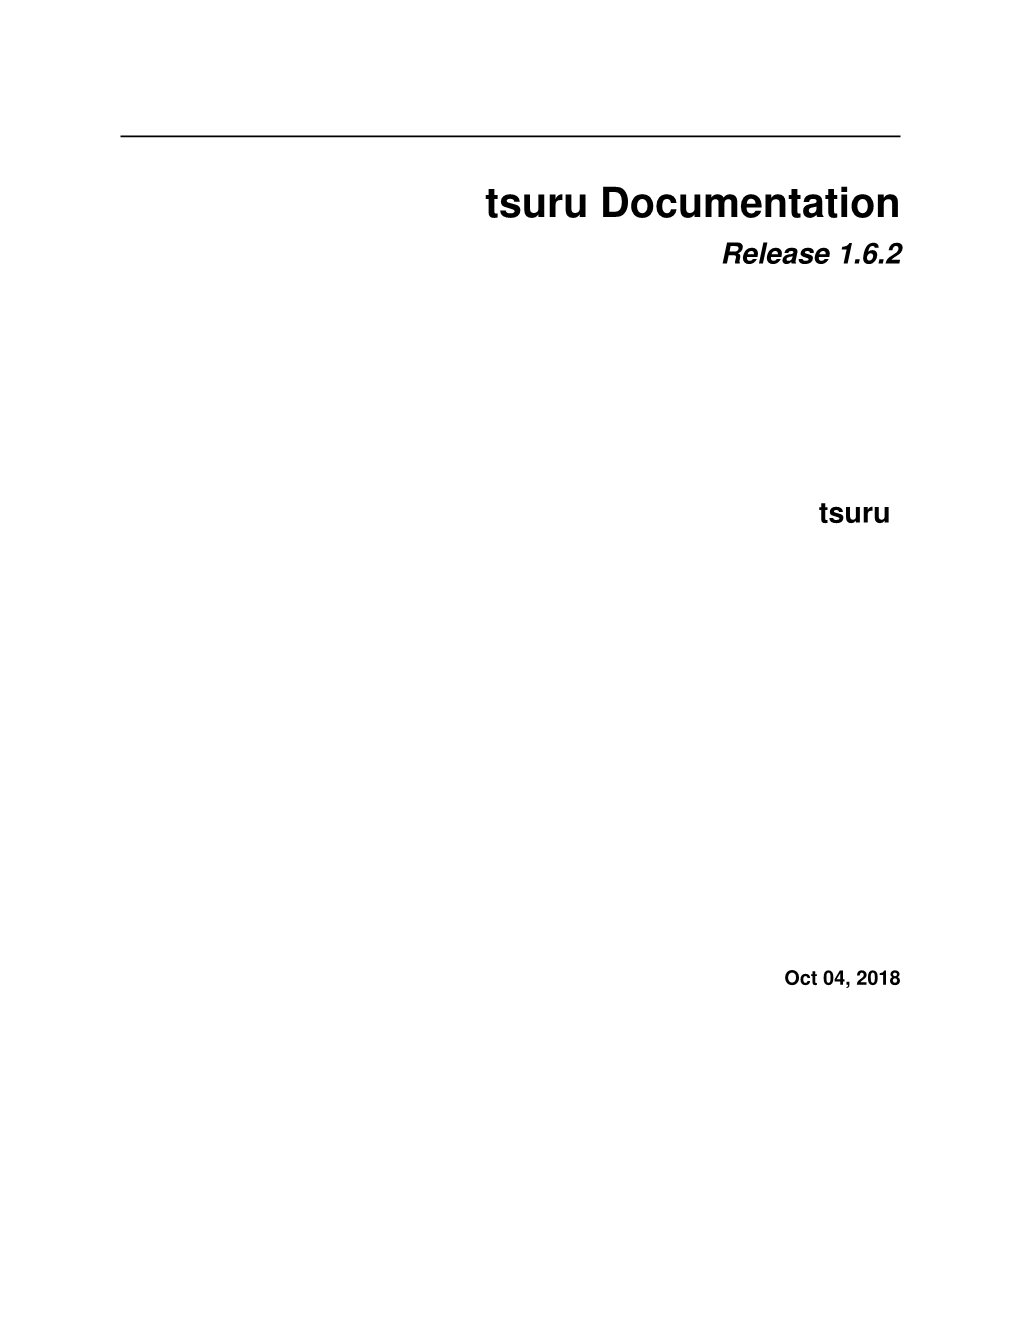 Tsuru Documentation Release 1.6.2